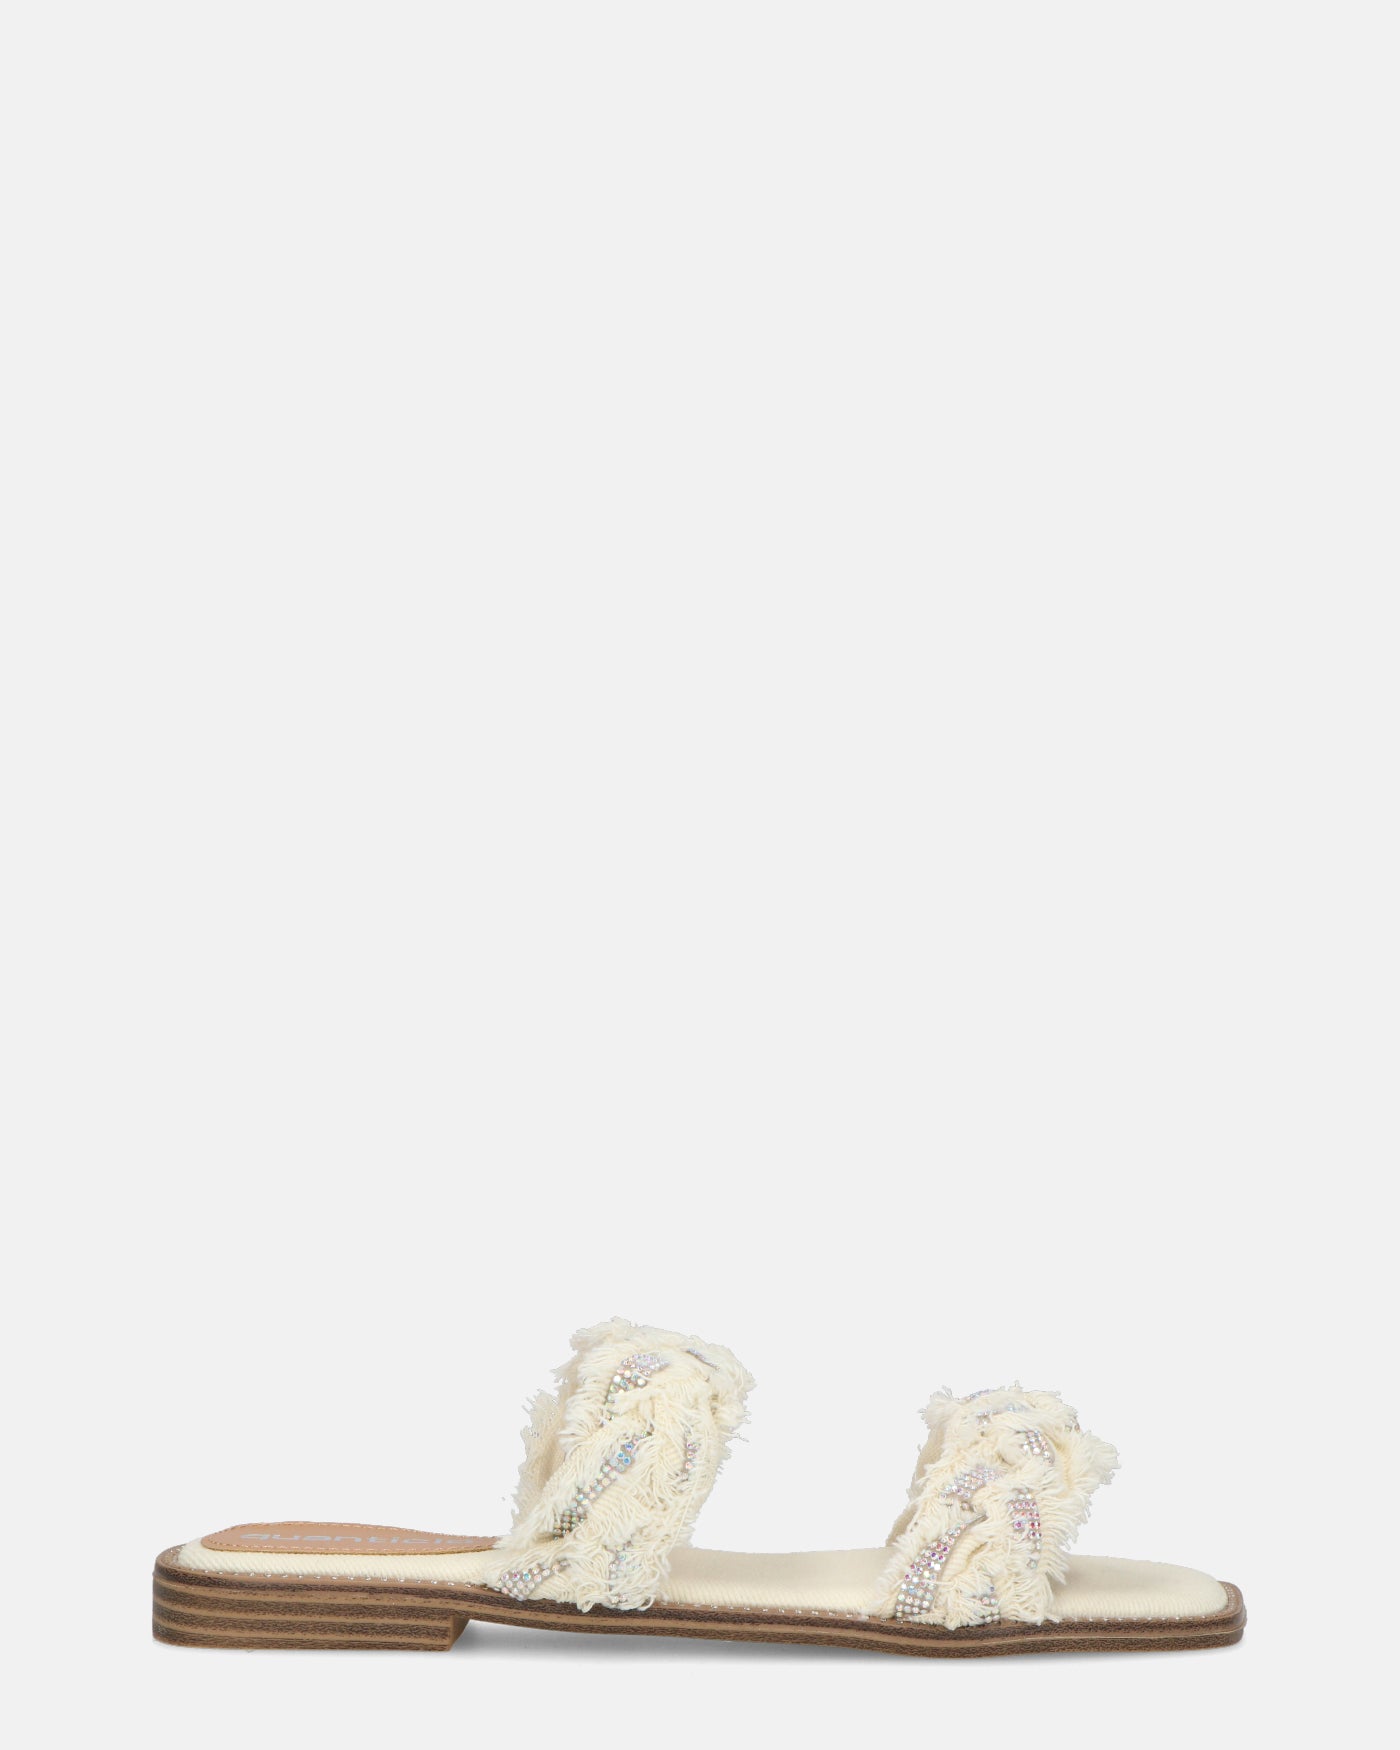 KALI - sandali in tessuto beige chiaro con gemme